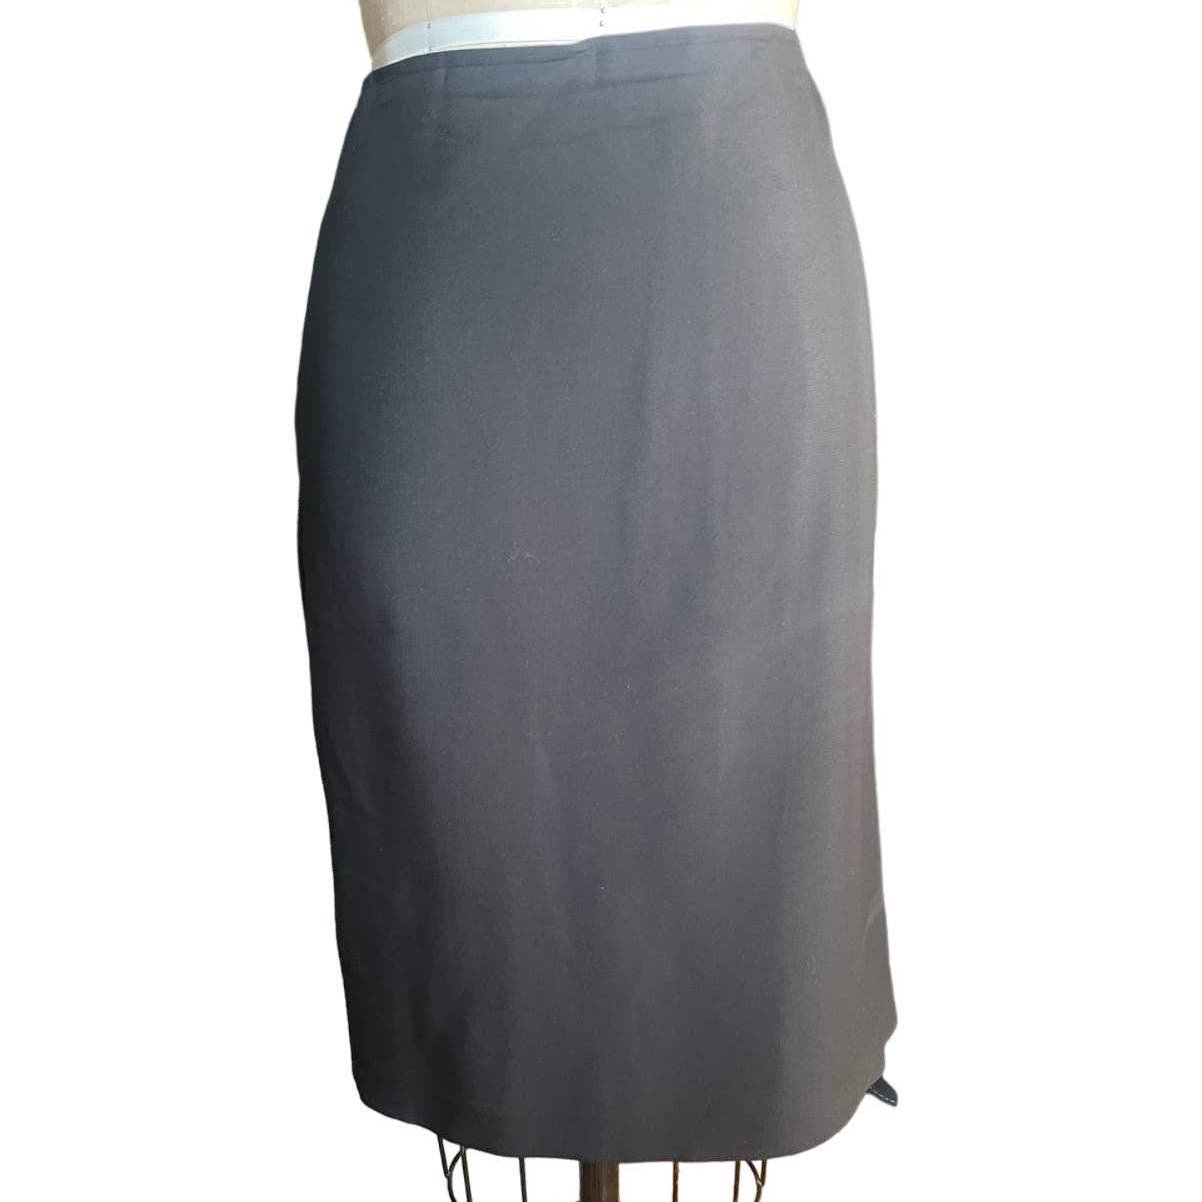 Classic Ellen Tracy 100% Silk Pencil Skirt Knee-Length in Black Size 10 GogjFY1Wg US Sale